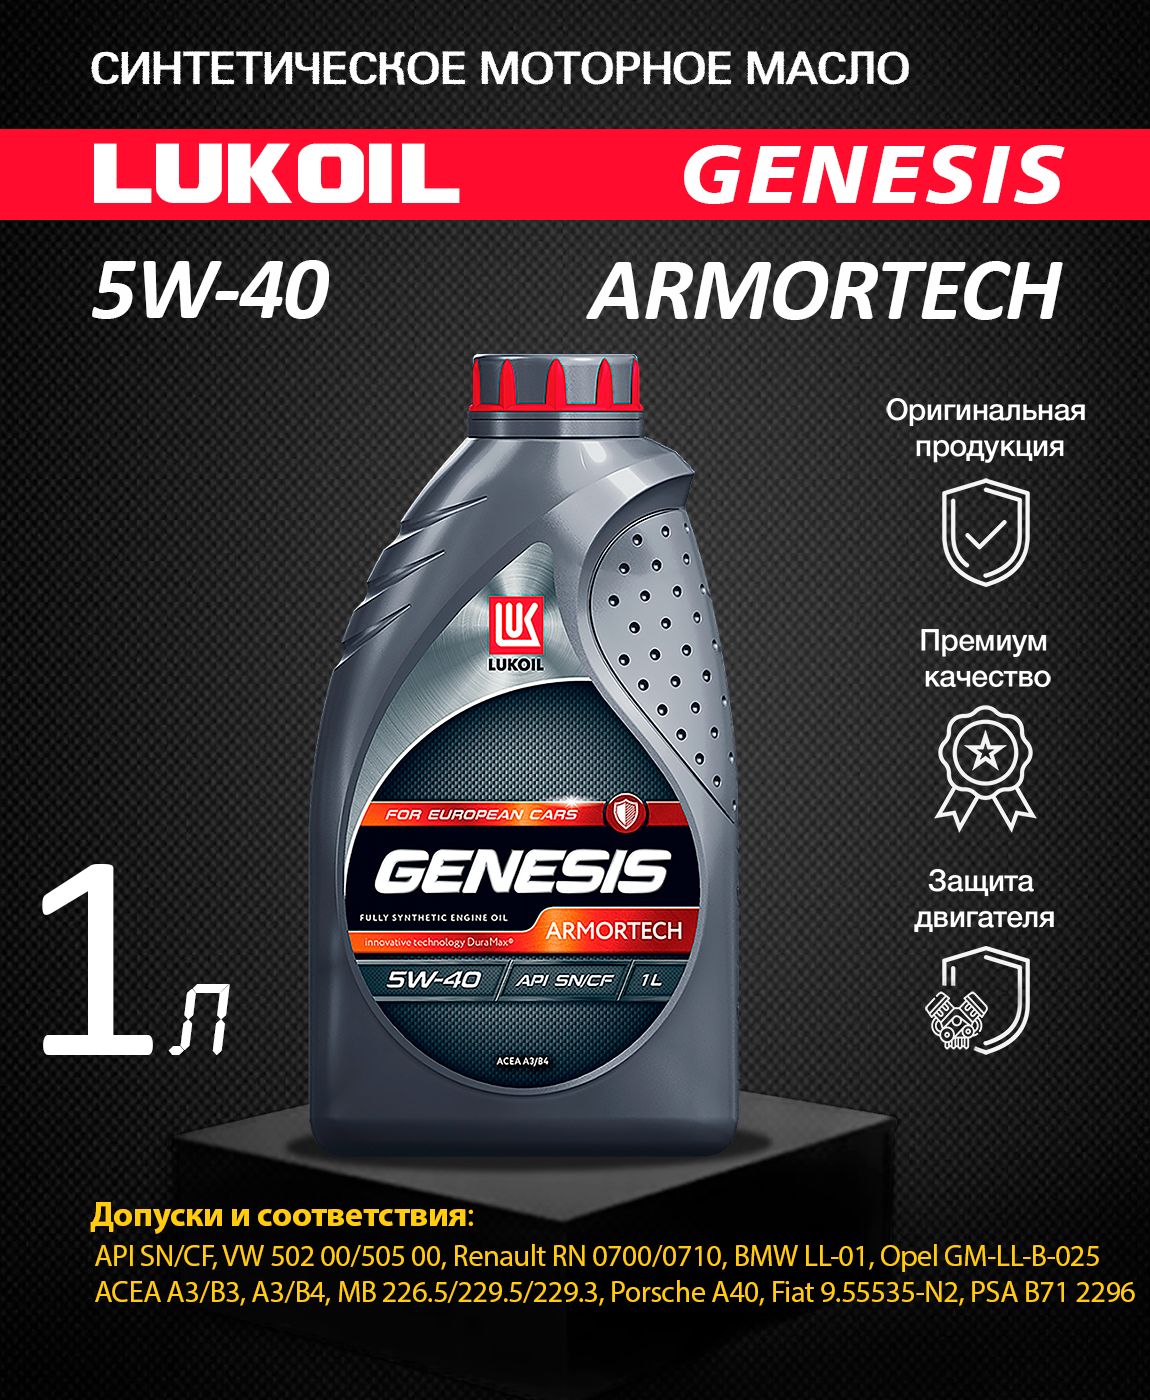 Масло лукойл 5 40 отзывы. Лукойл Genesis Armortech 5w-40 1л. Lukoil Genesis Armortech 5w-40 1л. 1607013 Lukoil Genesis Armortech 5w-40 5л. Genesis Armortech for European cars 5w-40.